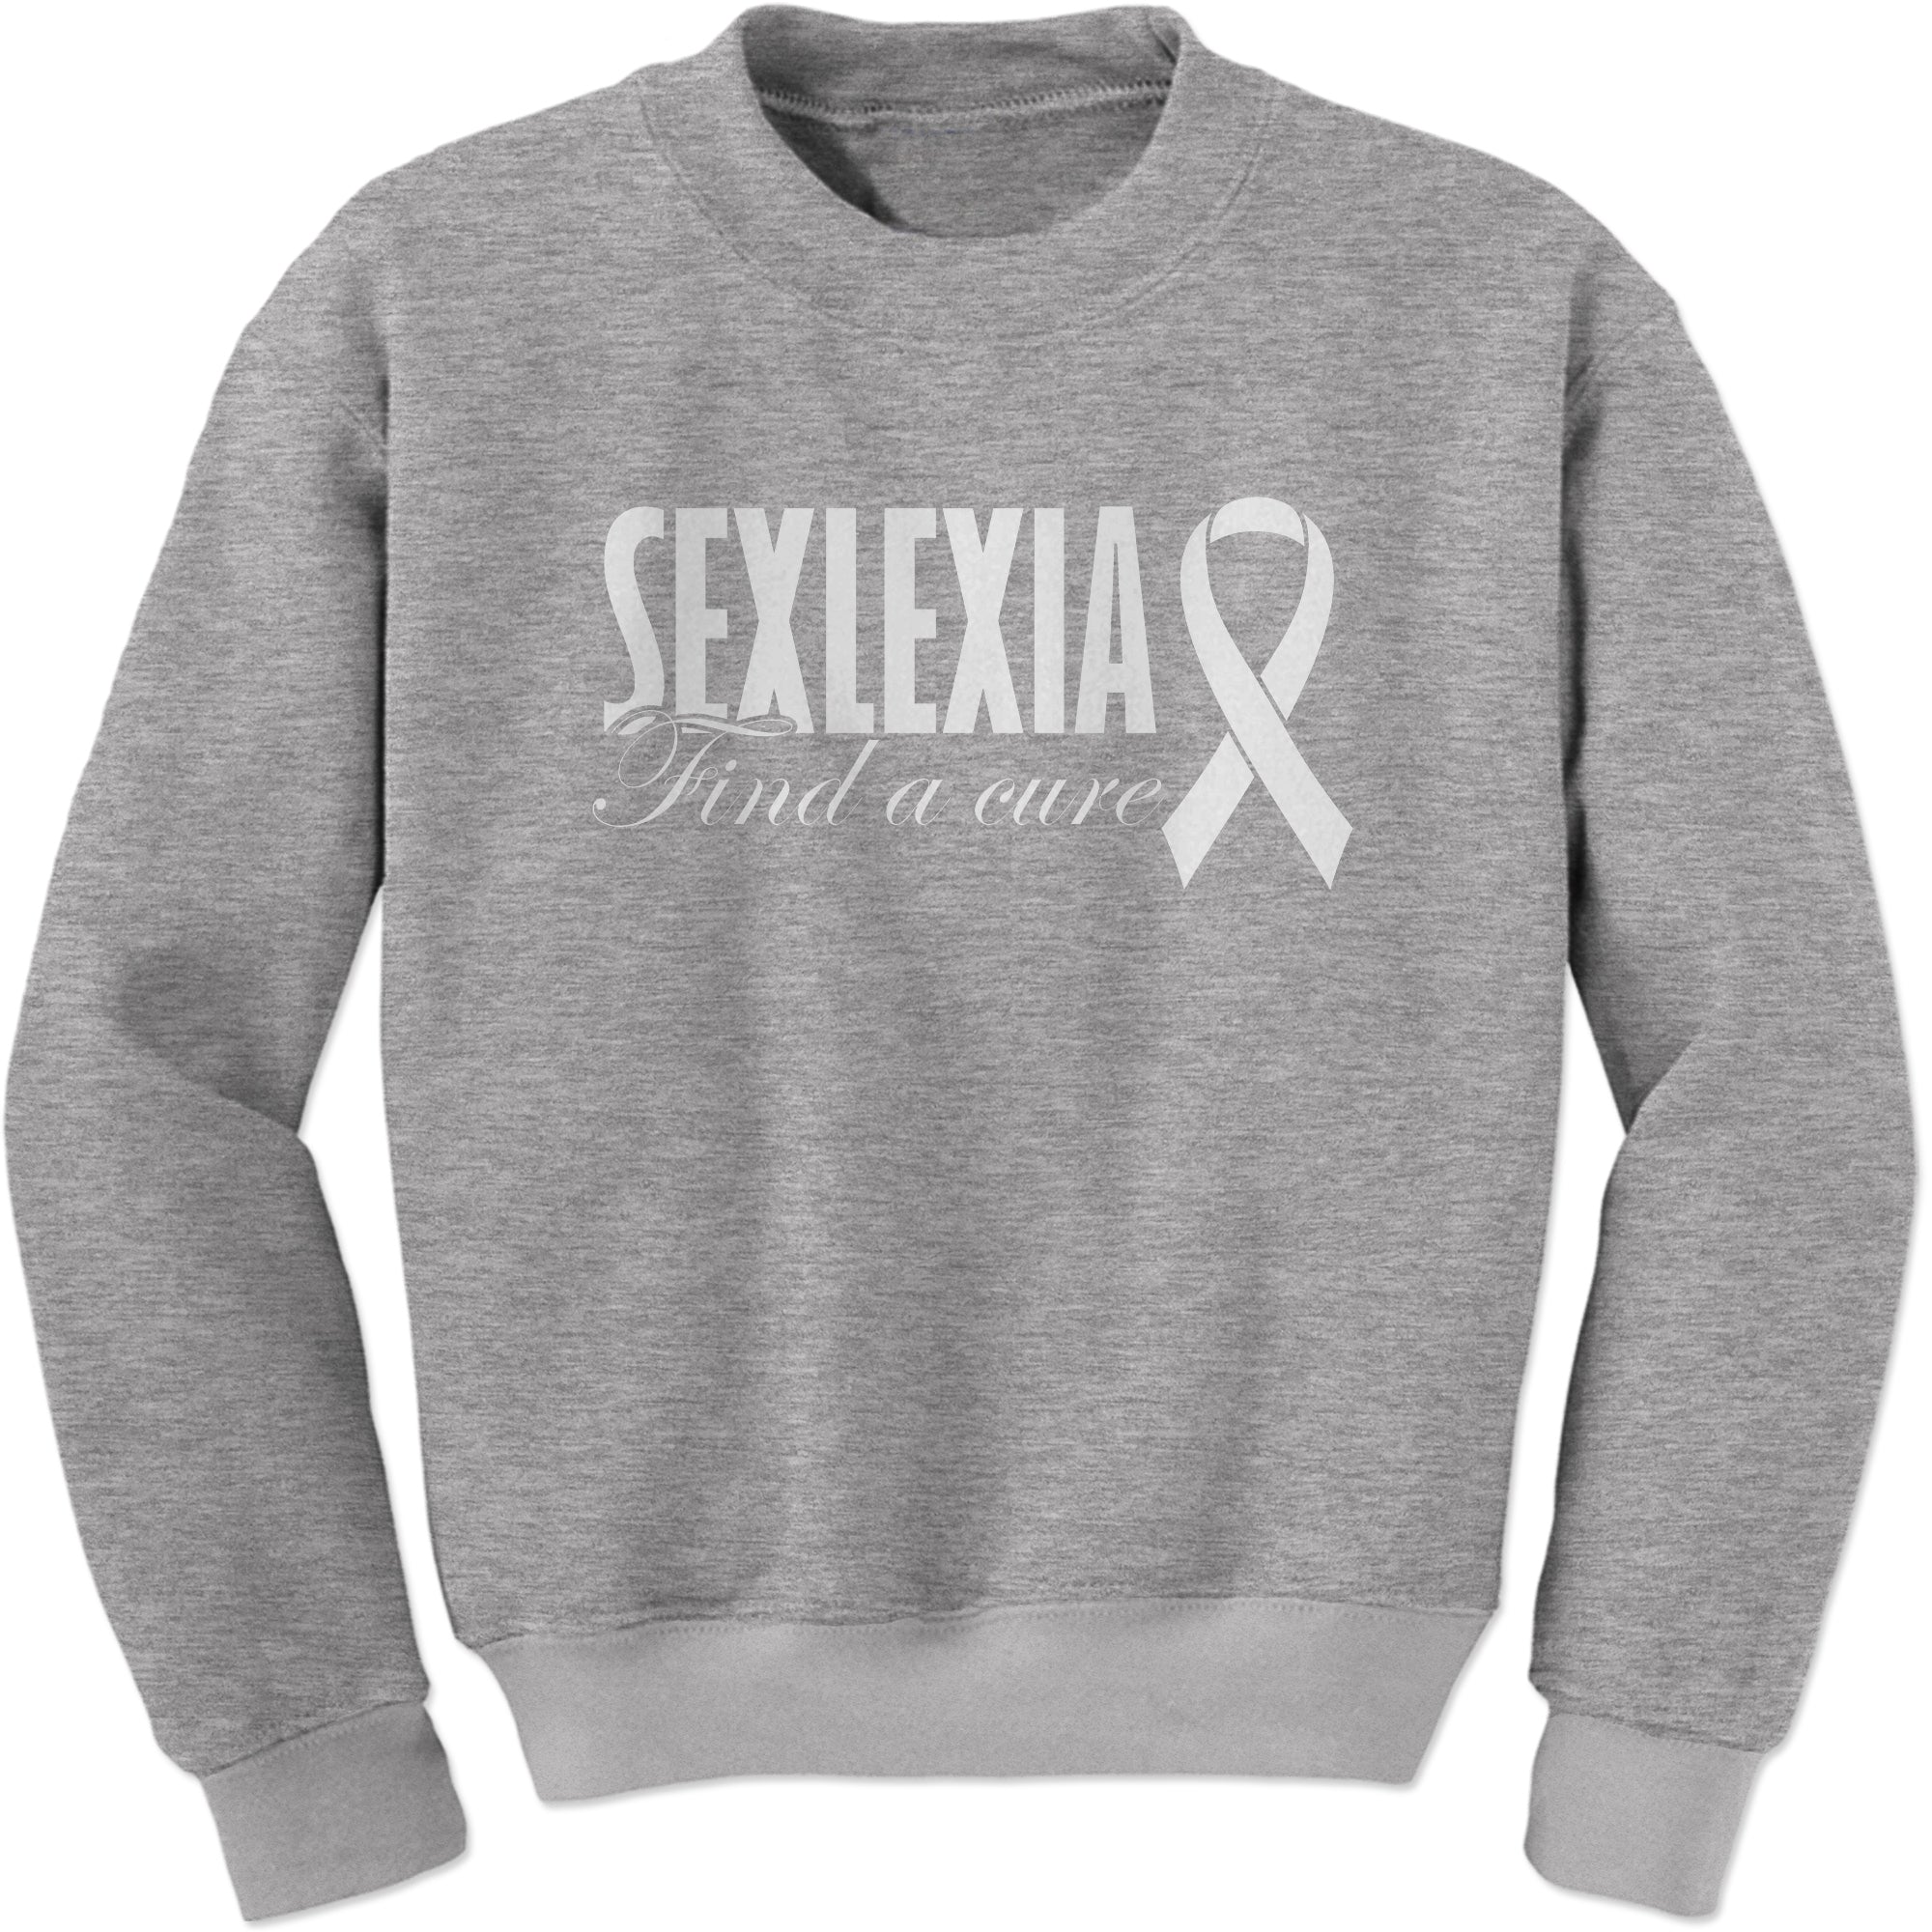 Sexlexia Find a Cure Sweatshirt